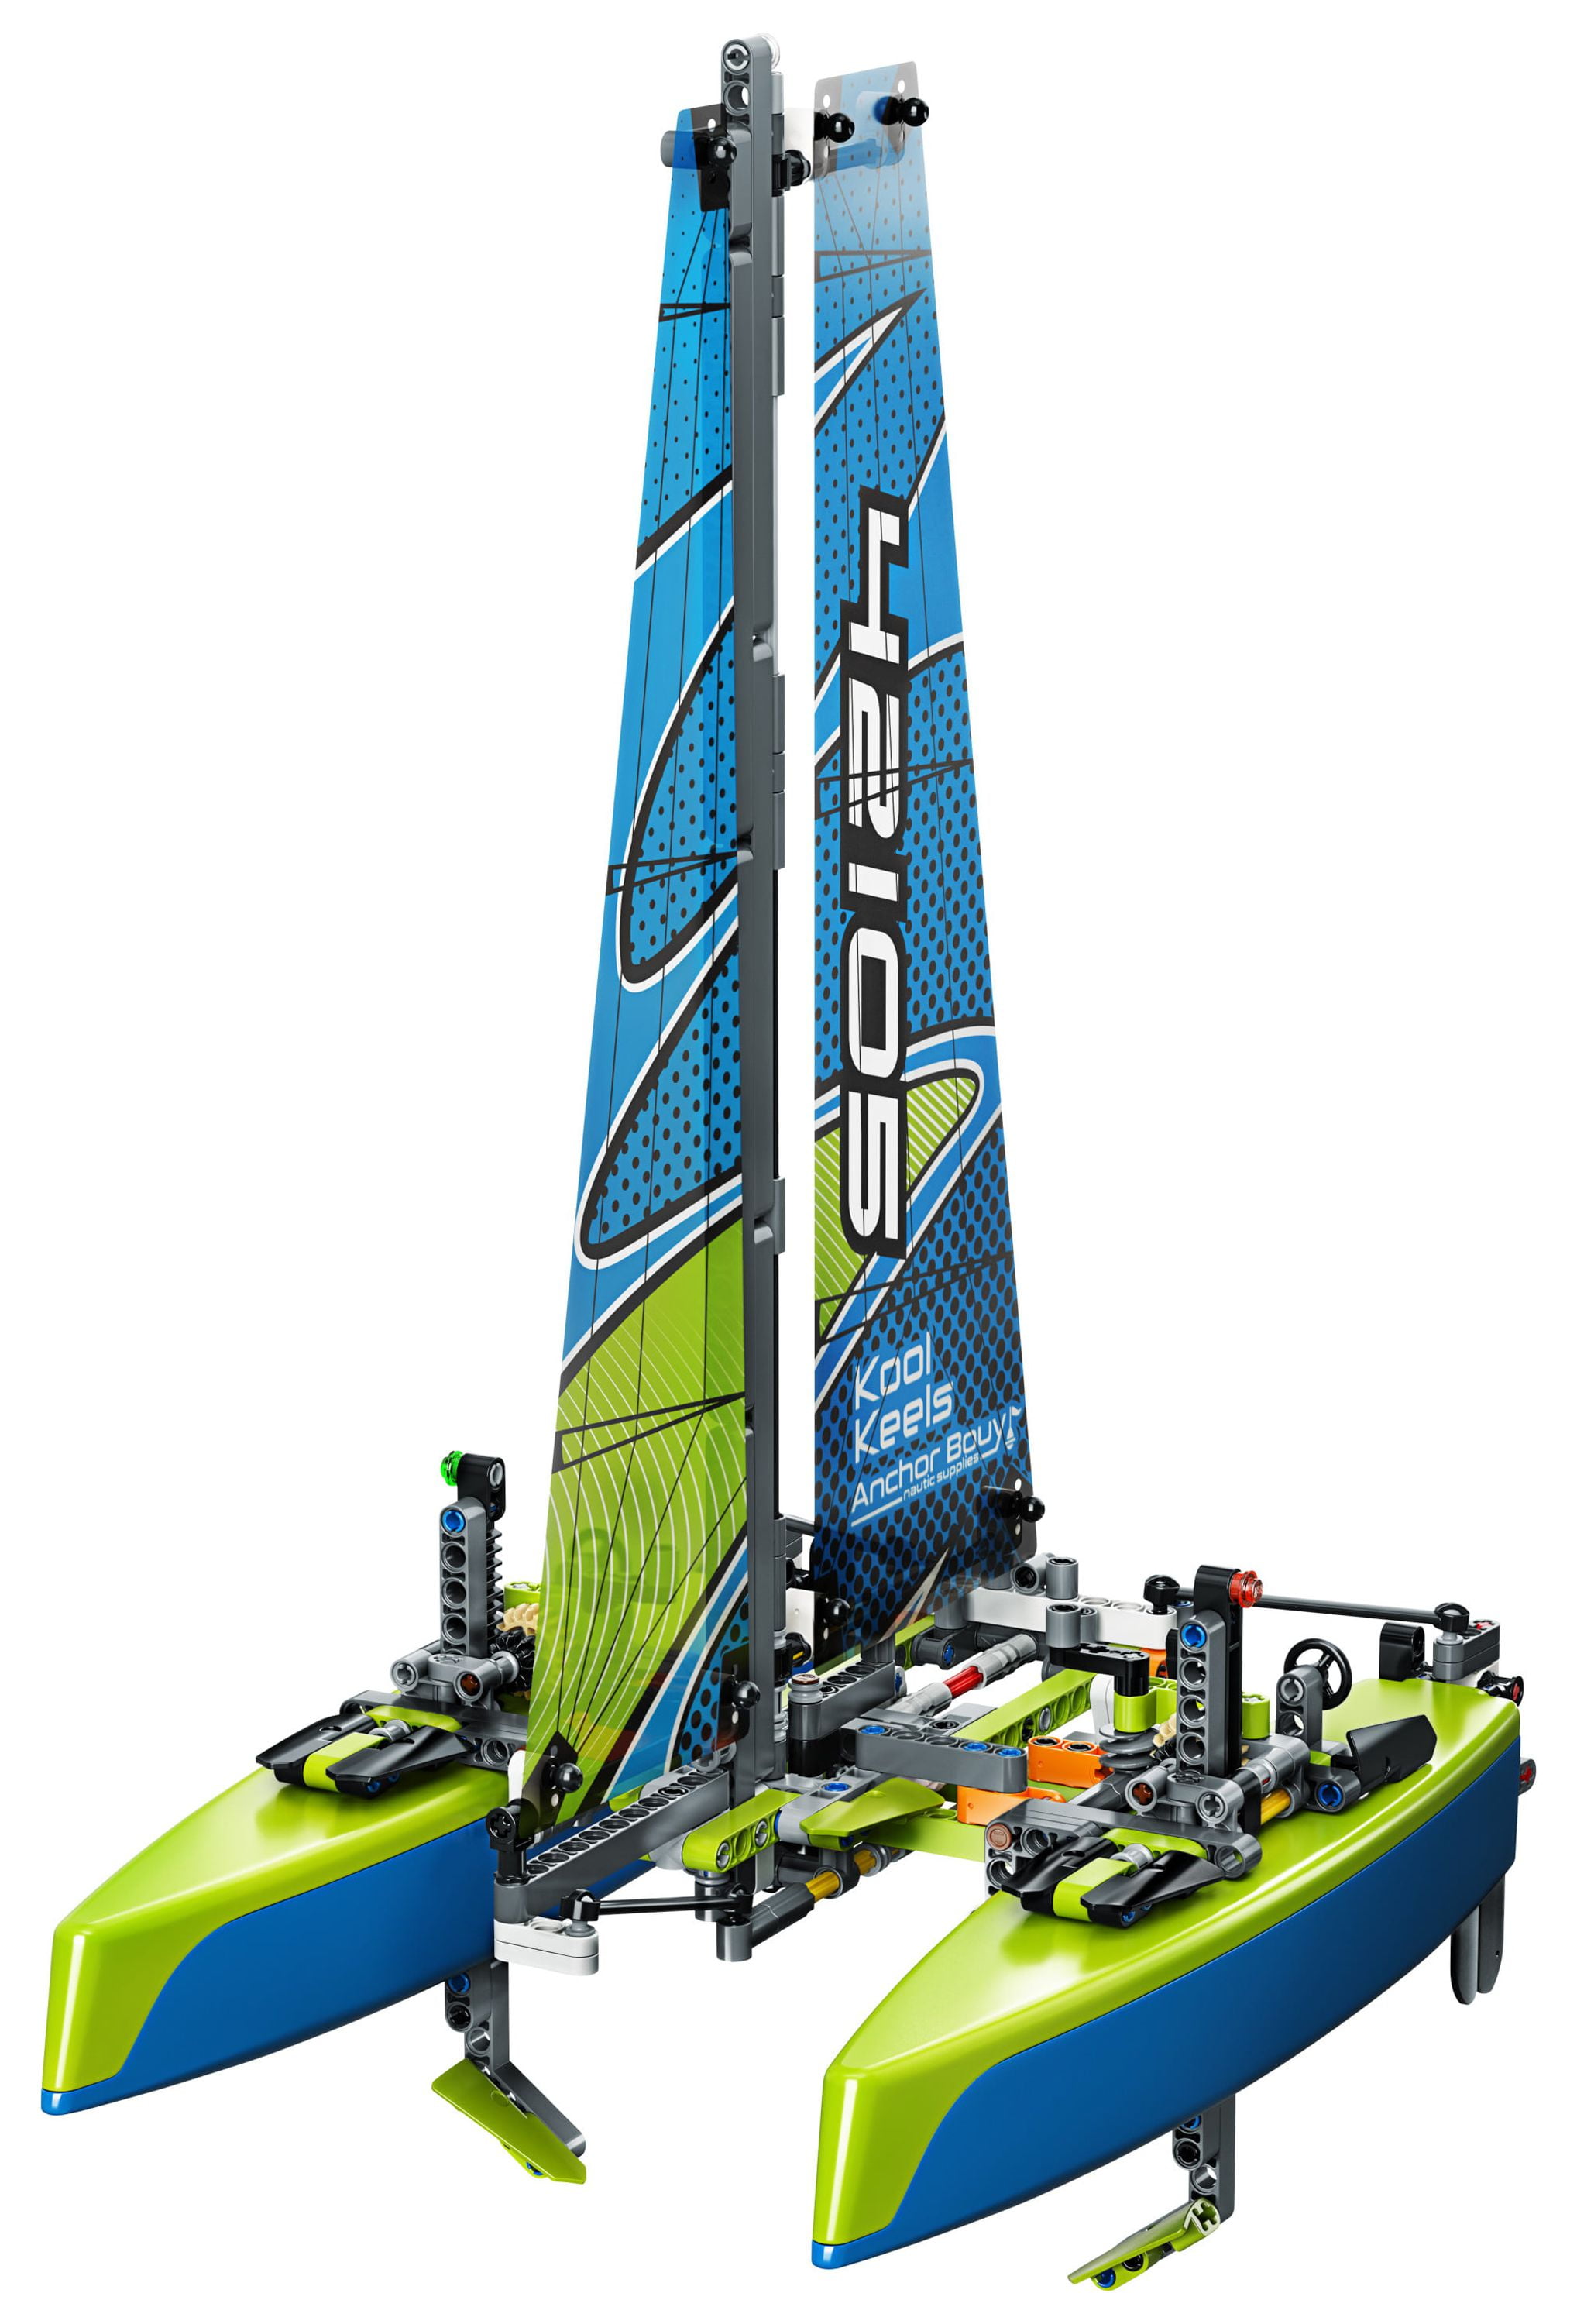 LEGO Technic - Le catamaran - 42105 - En stock chez